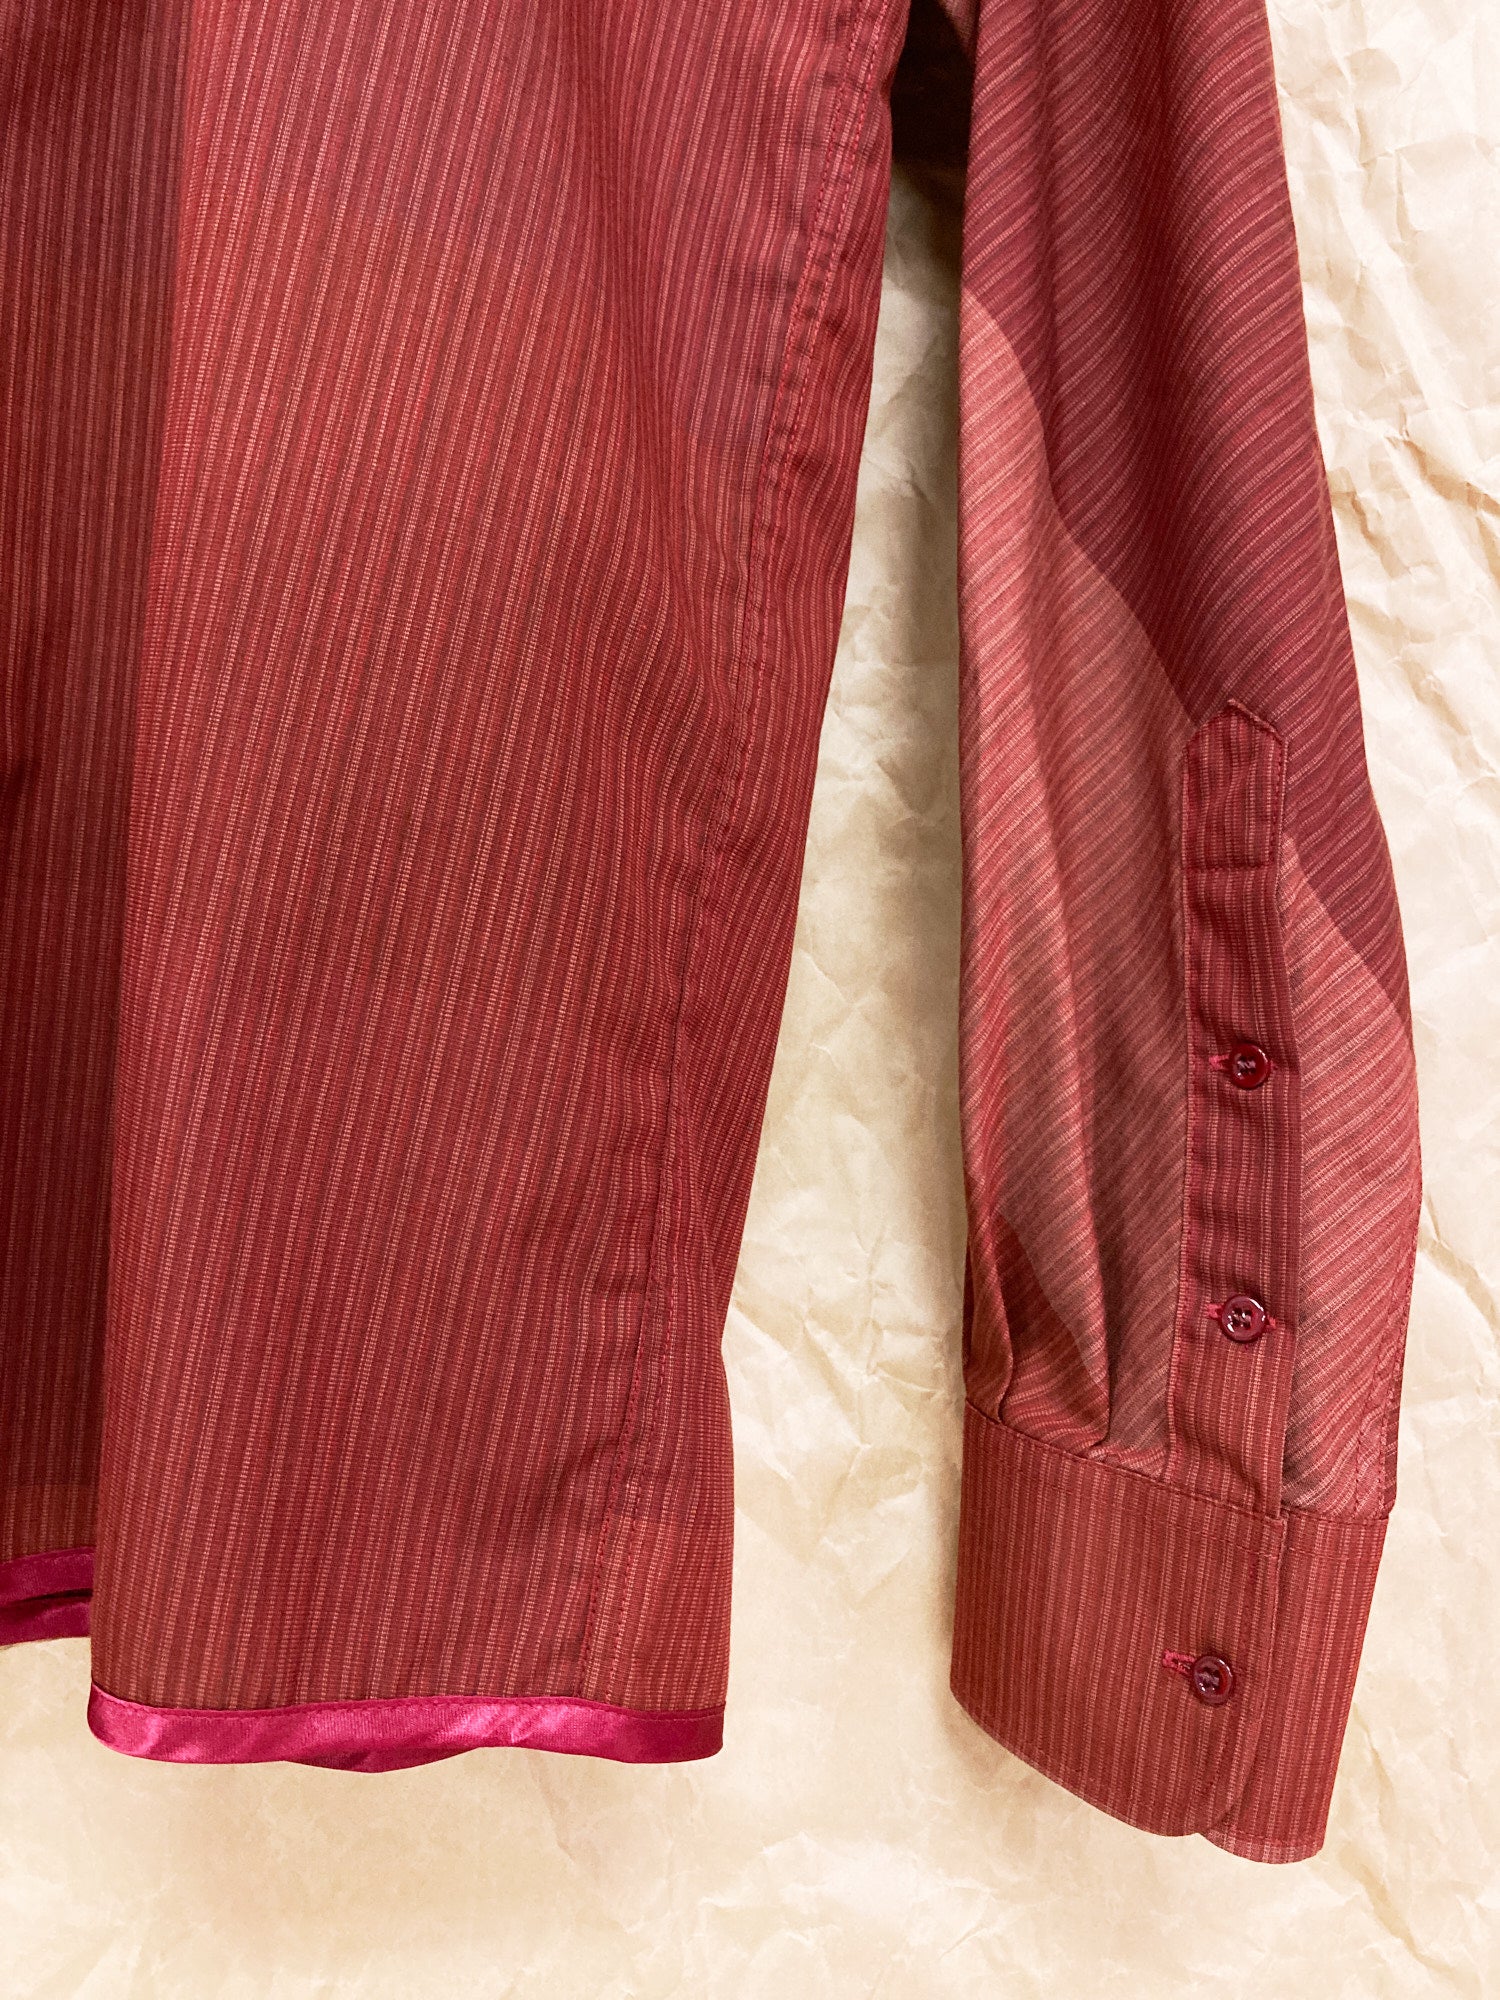 Jose Levy red cotton stripe multi tonal shirt with satin hem piping